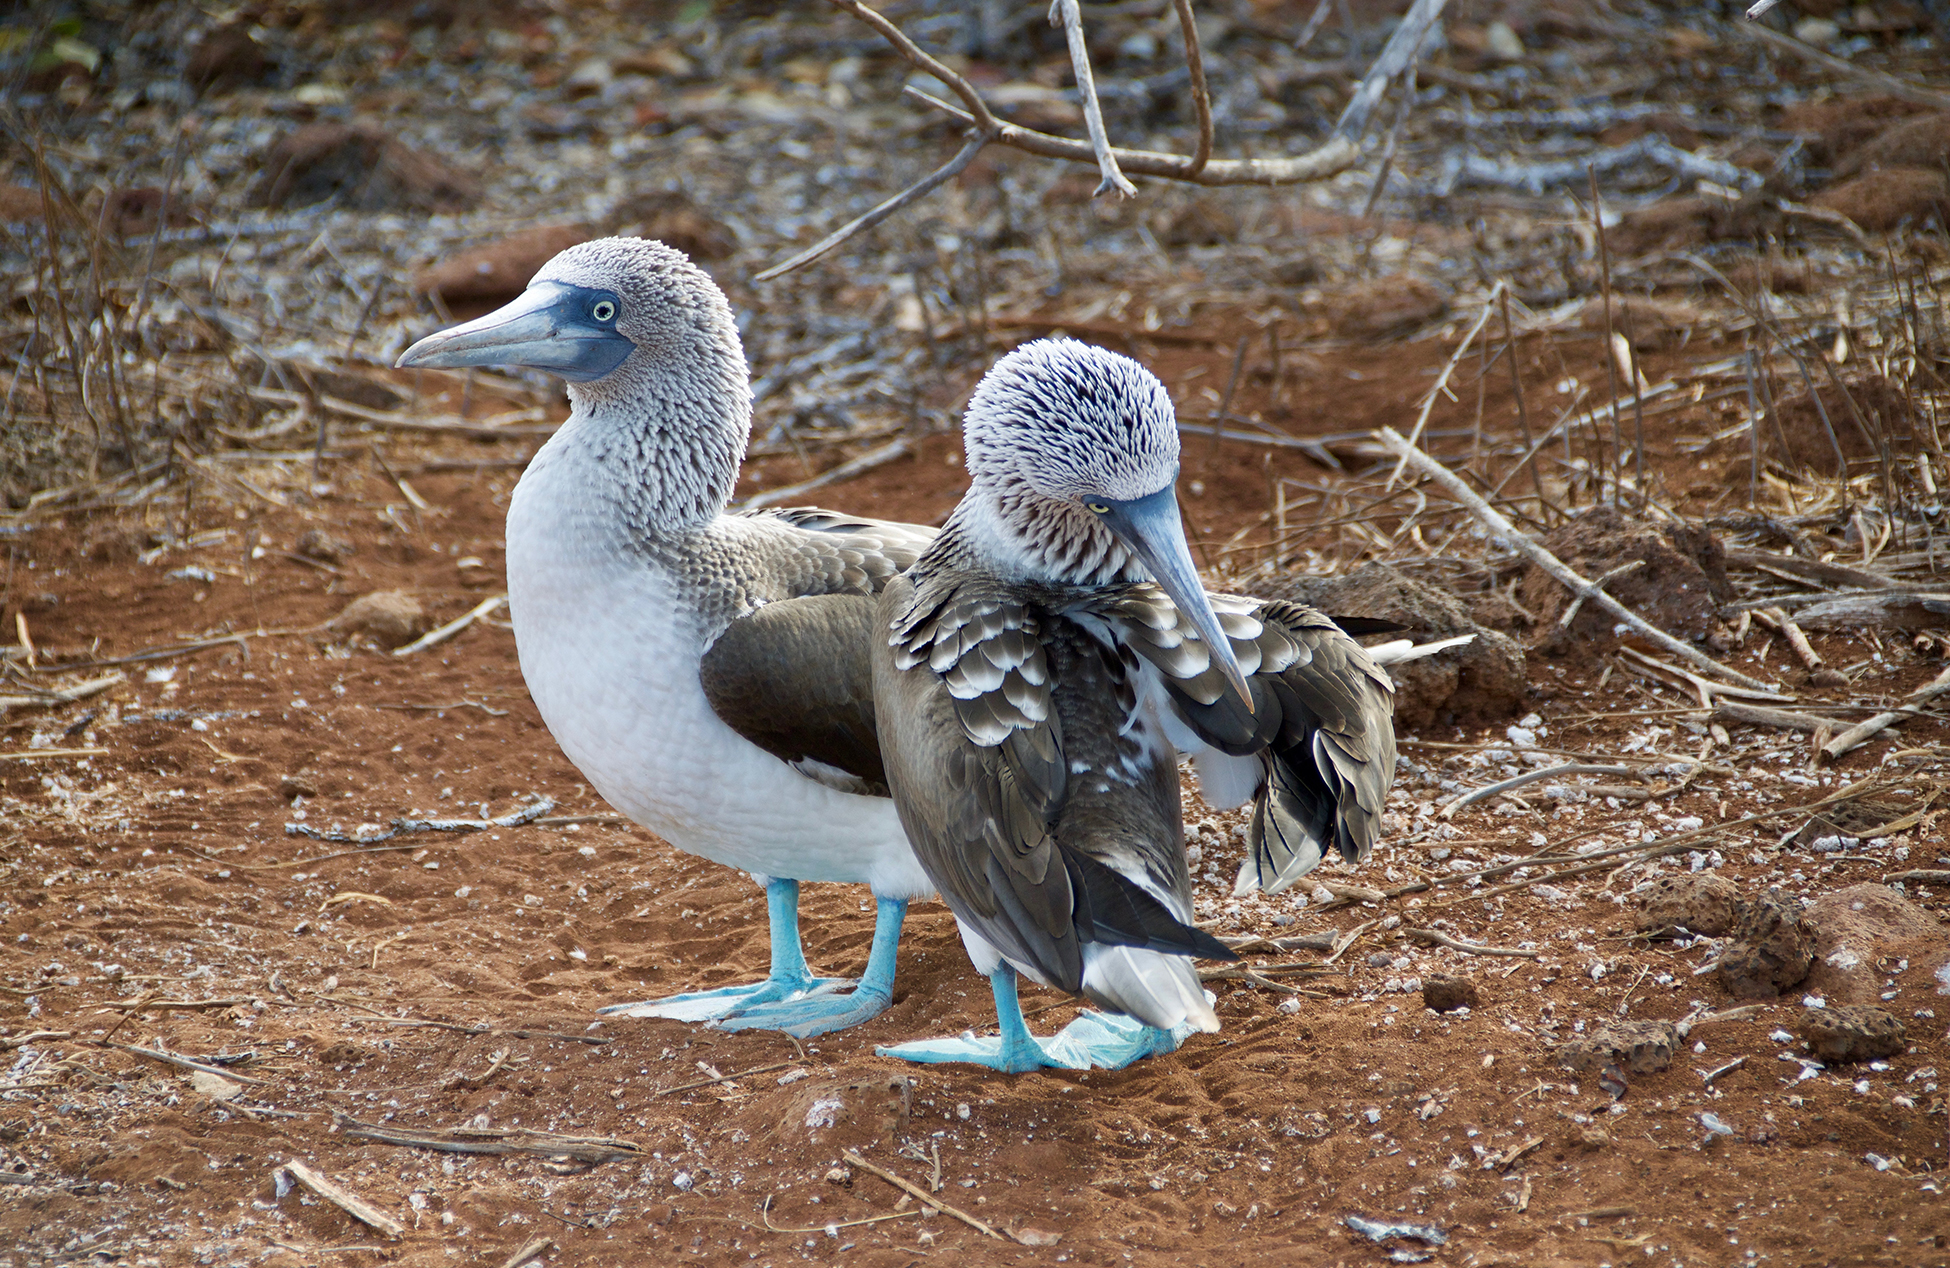 Experience unique wildlife on the Galapagos | KILROY